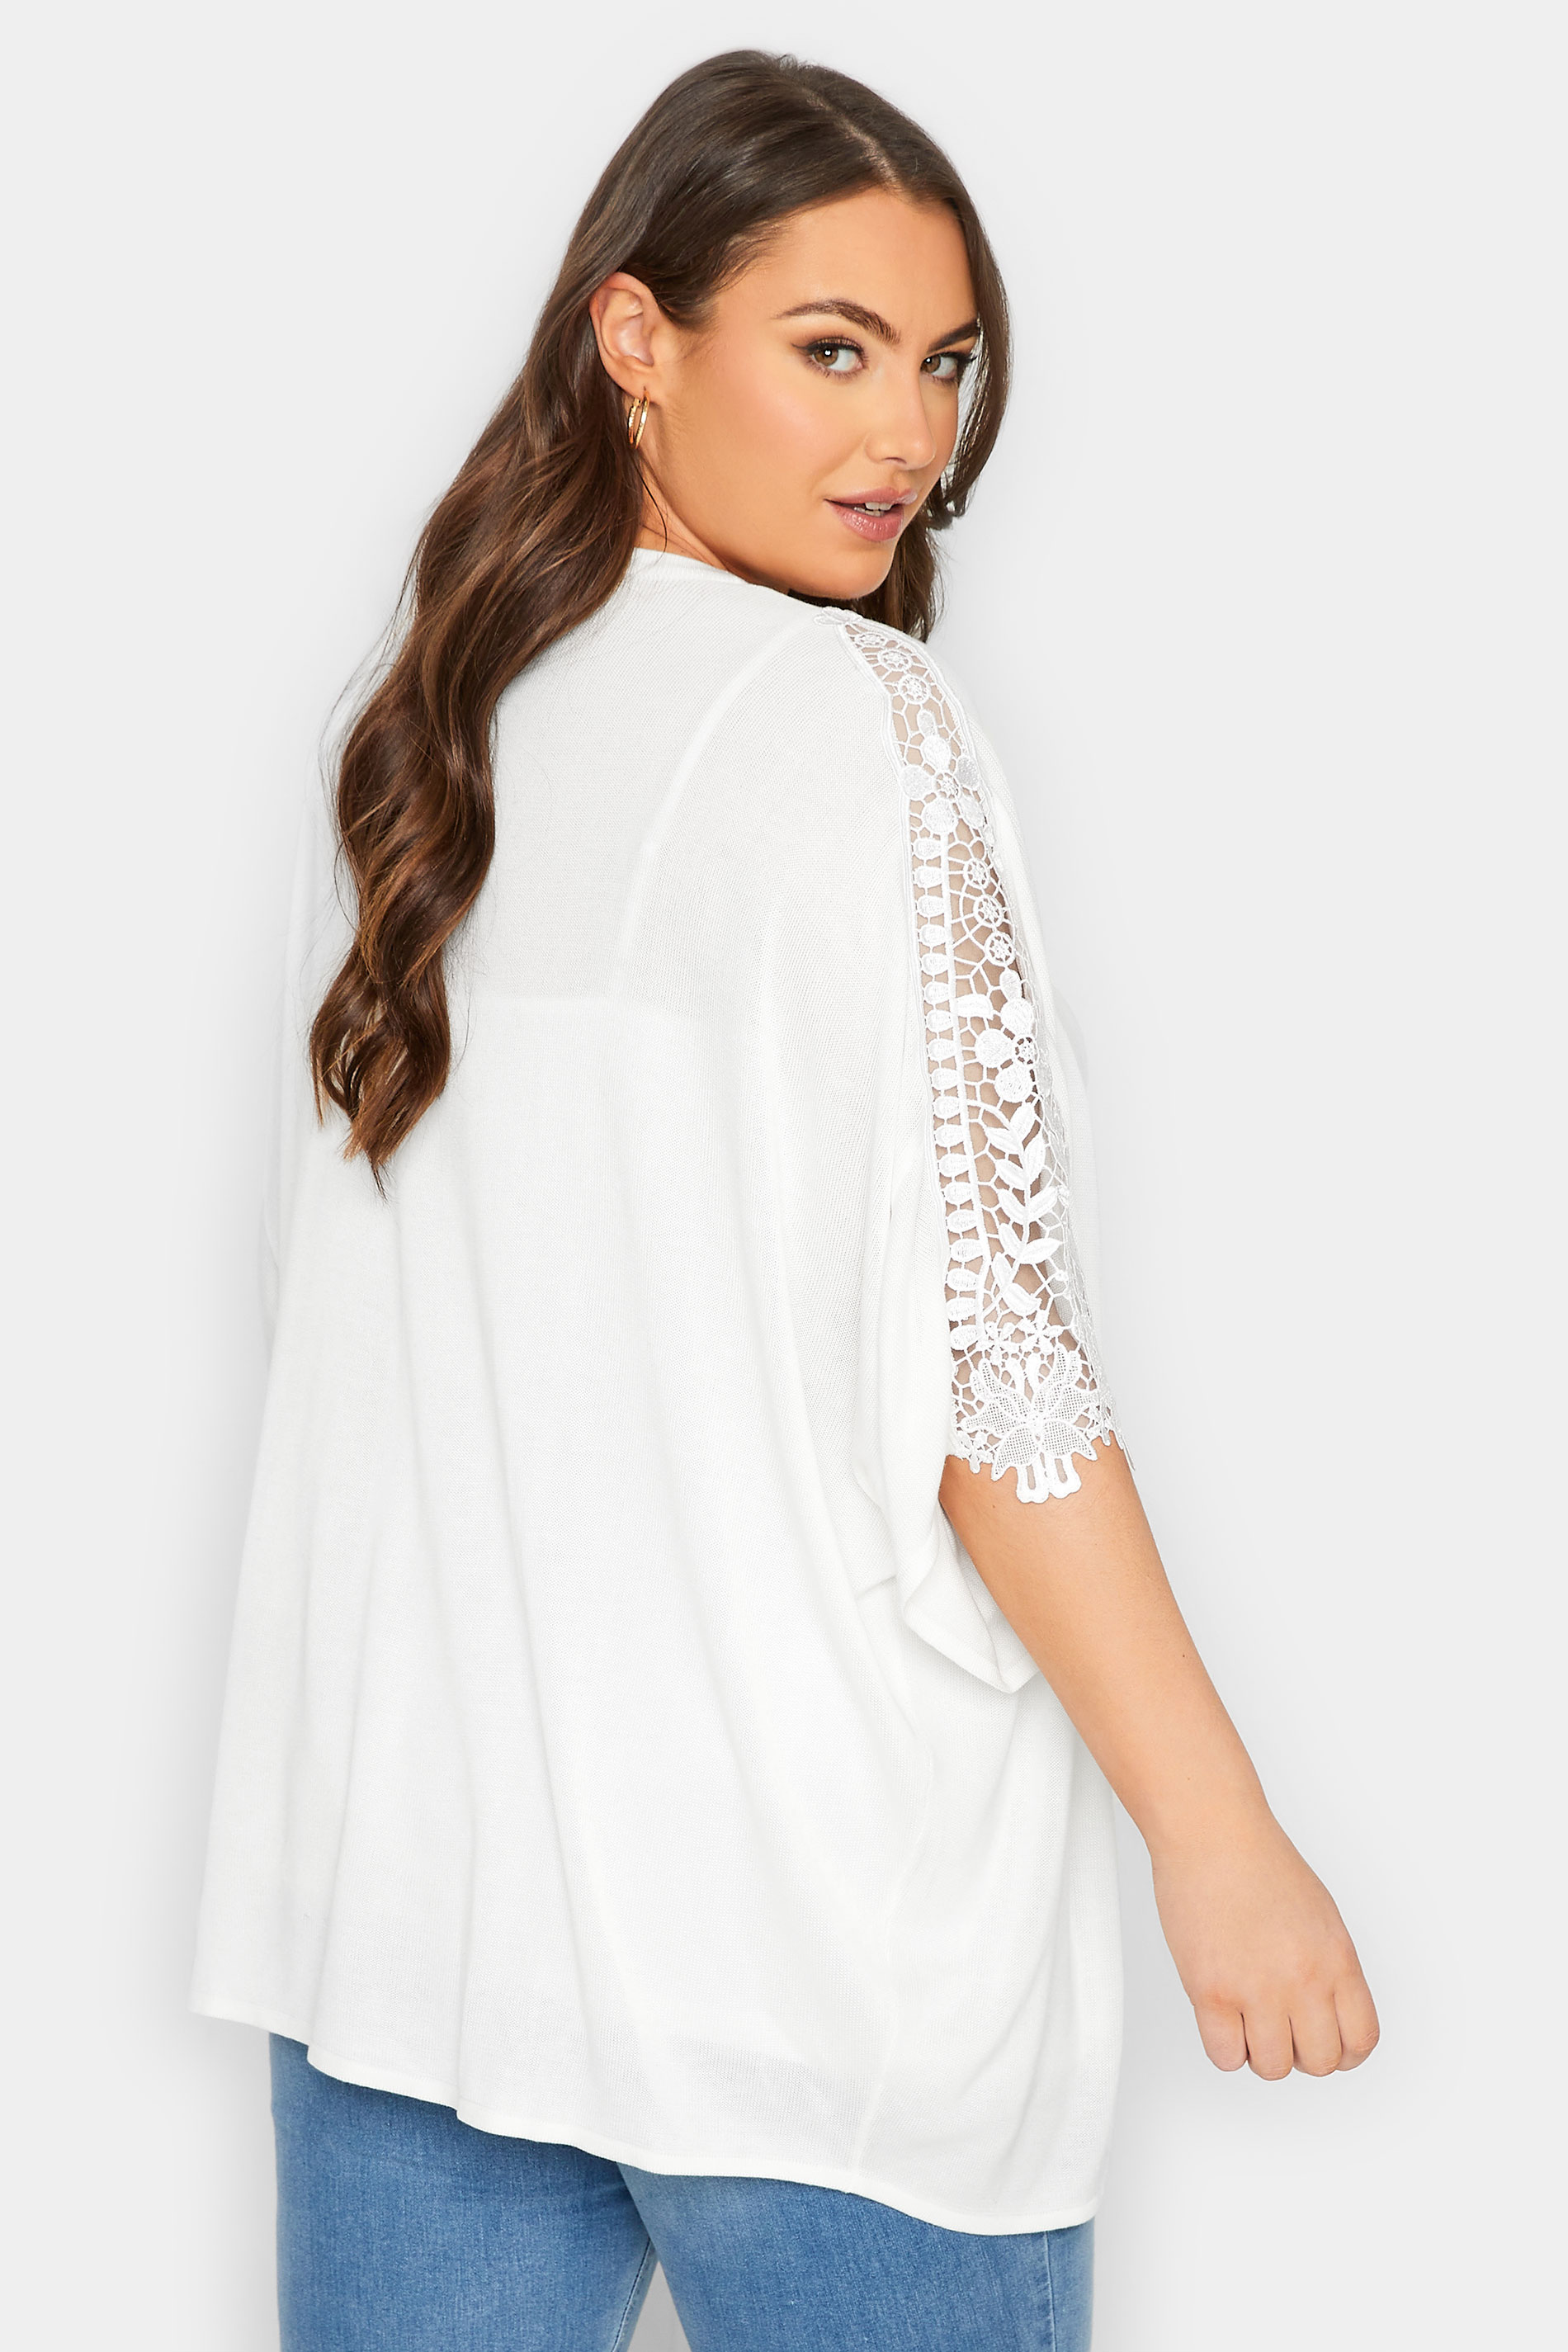 YOURS Plus Size White Crochet Sleeve Kimono | Yours Clothing 3